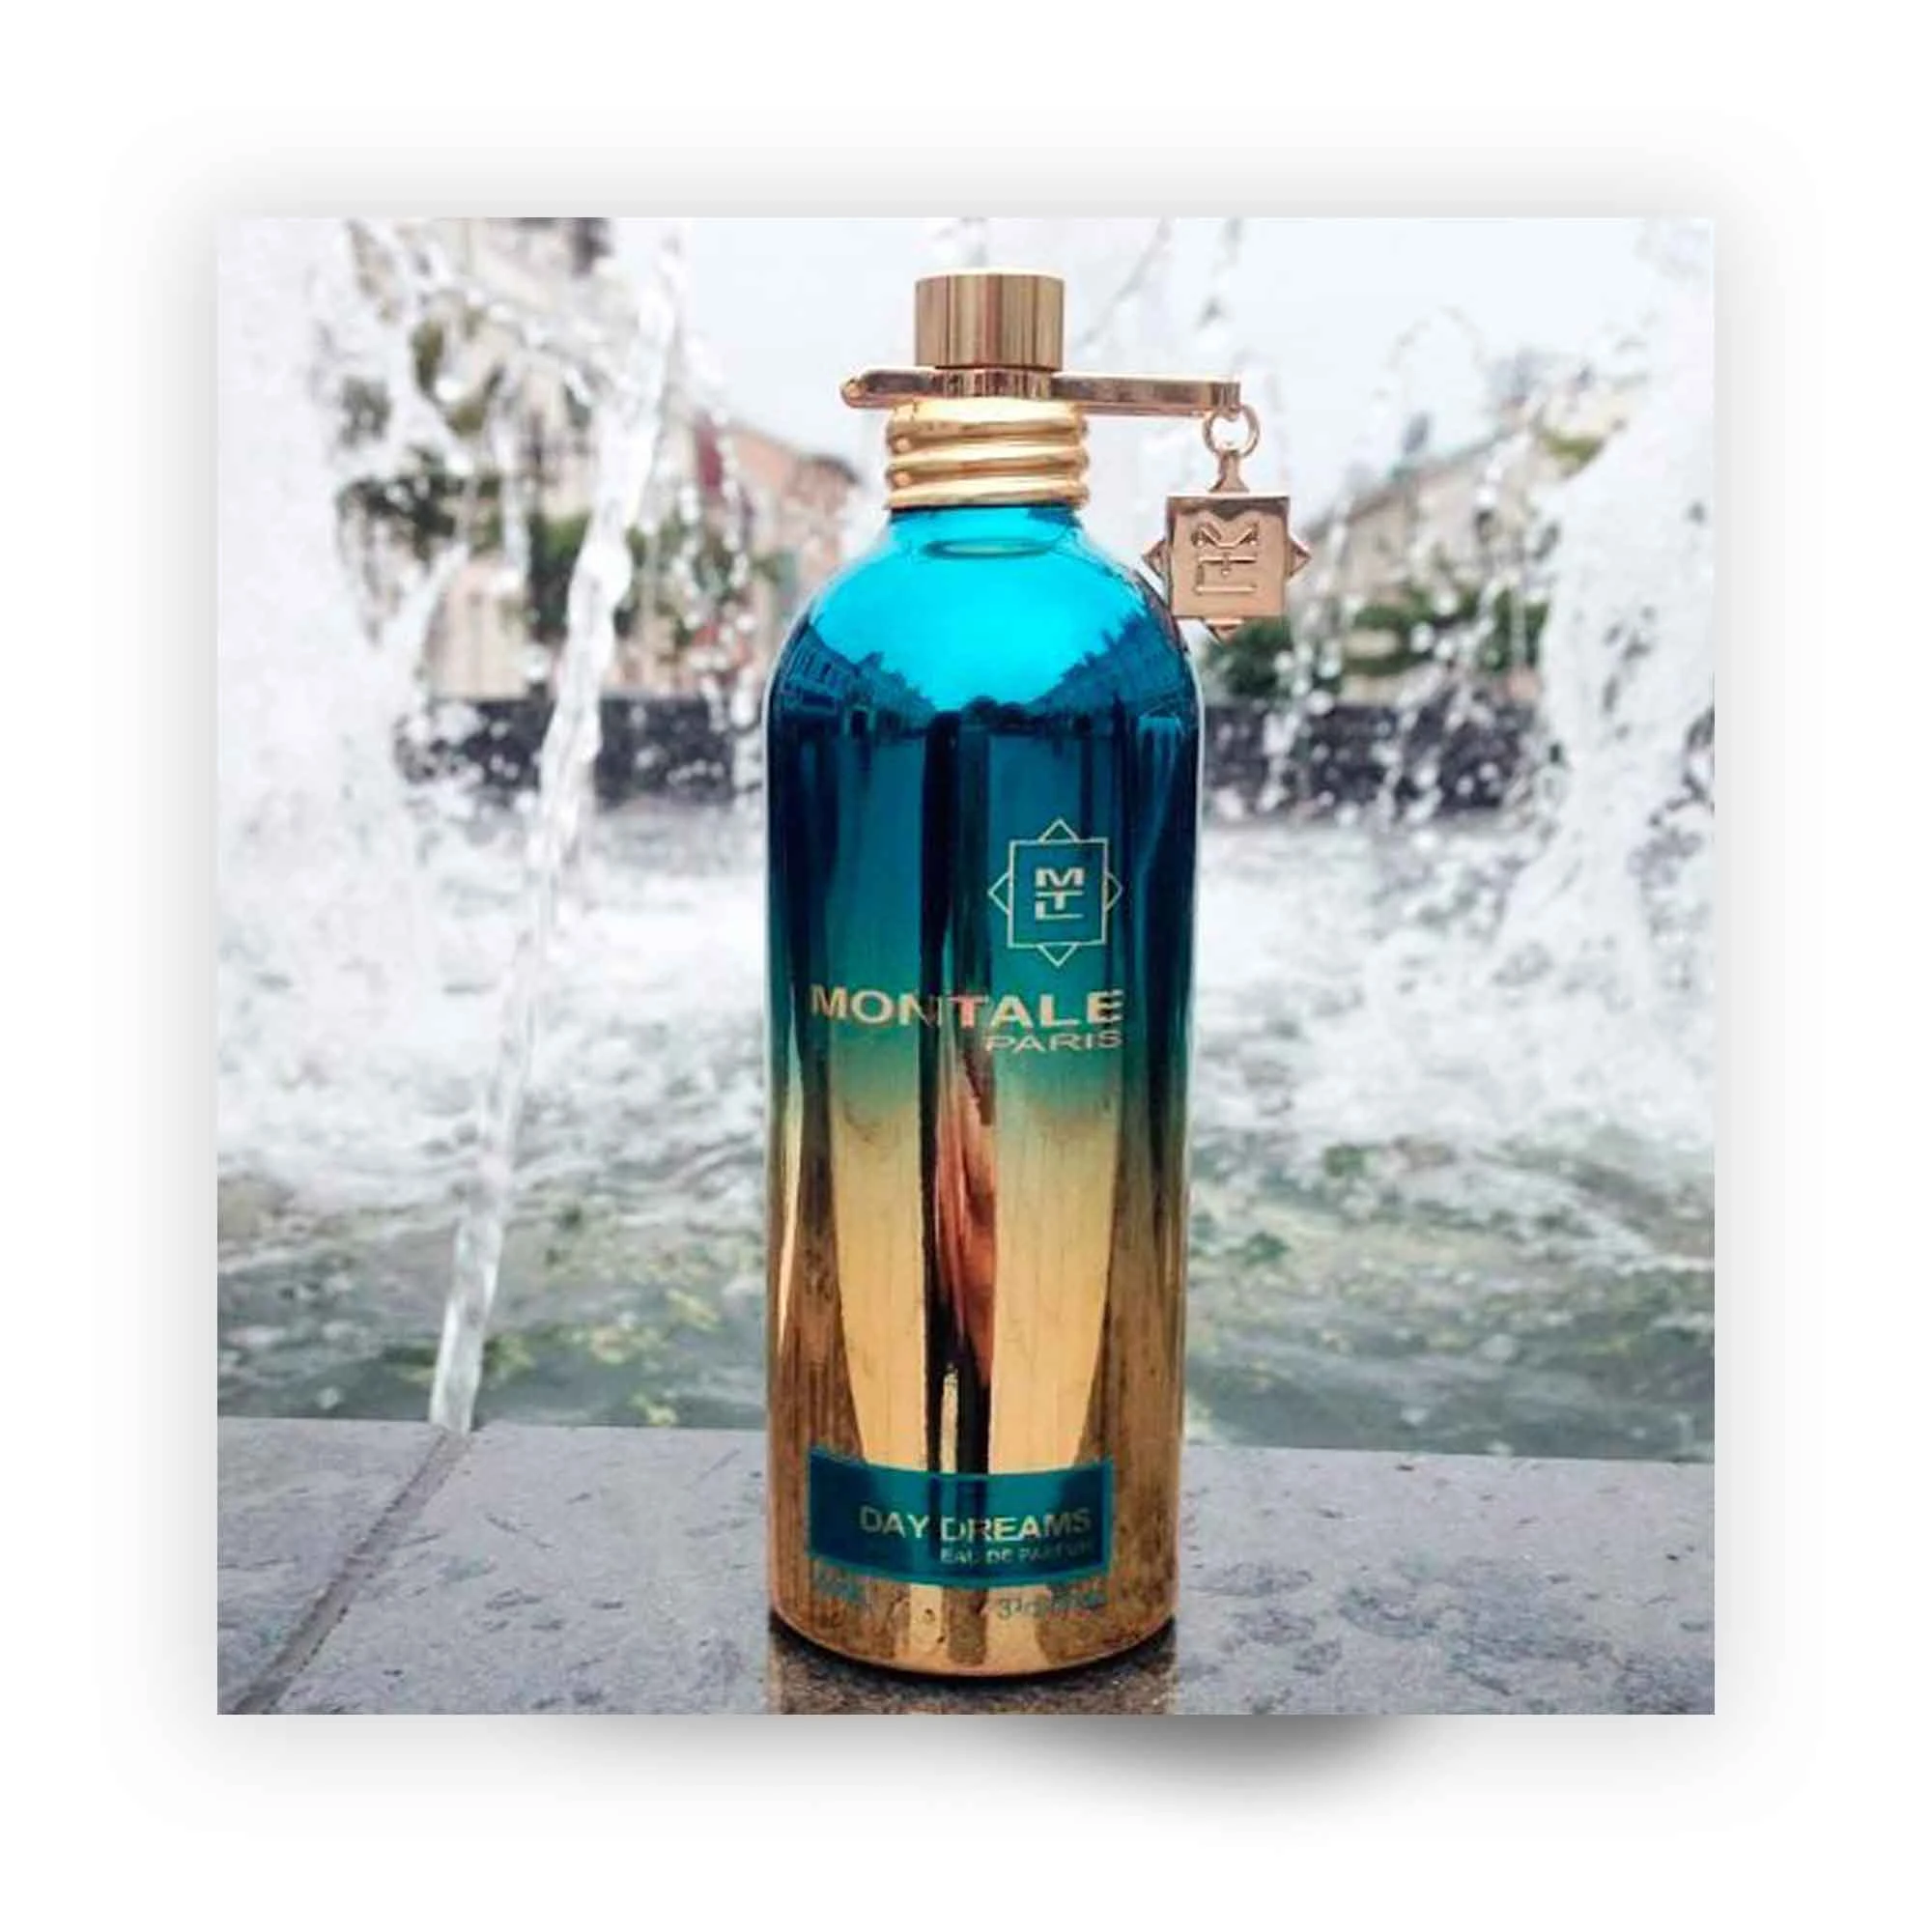 "Day Dreams" eau parfum. Unisex ml deluxe perfume|Deodorants & Antiperspirants| -